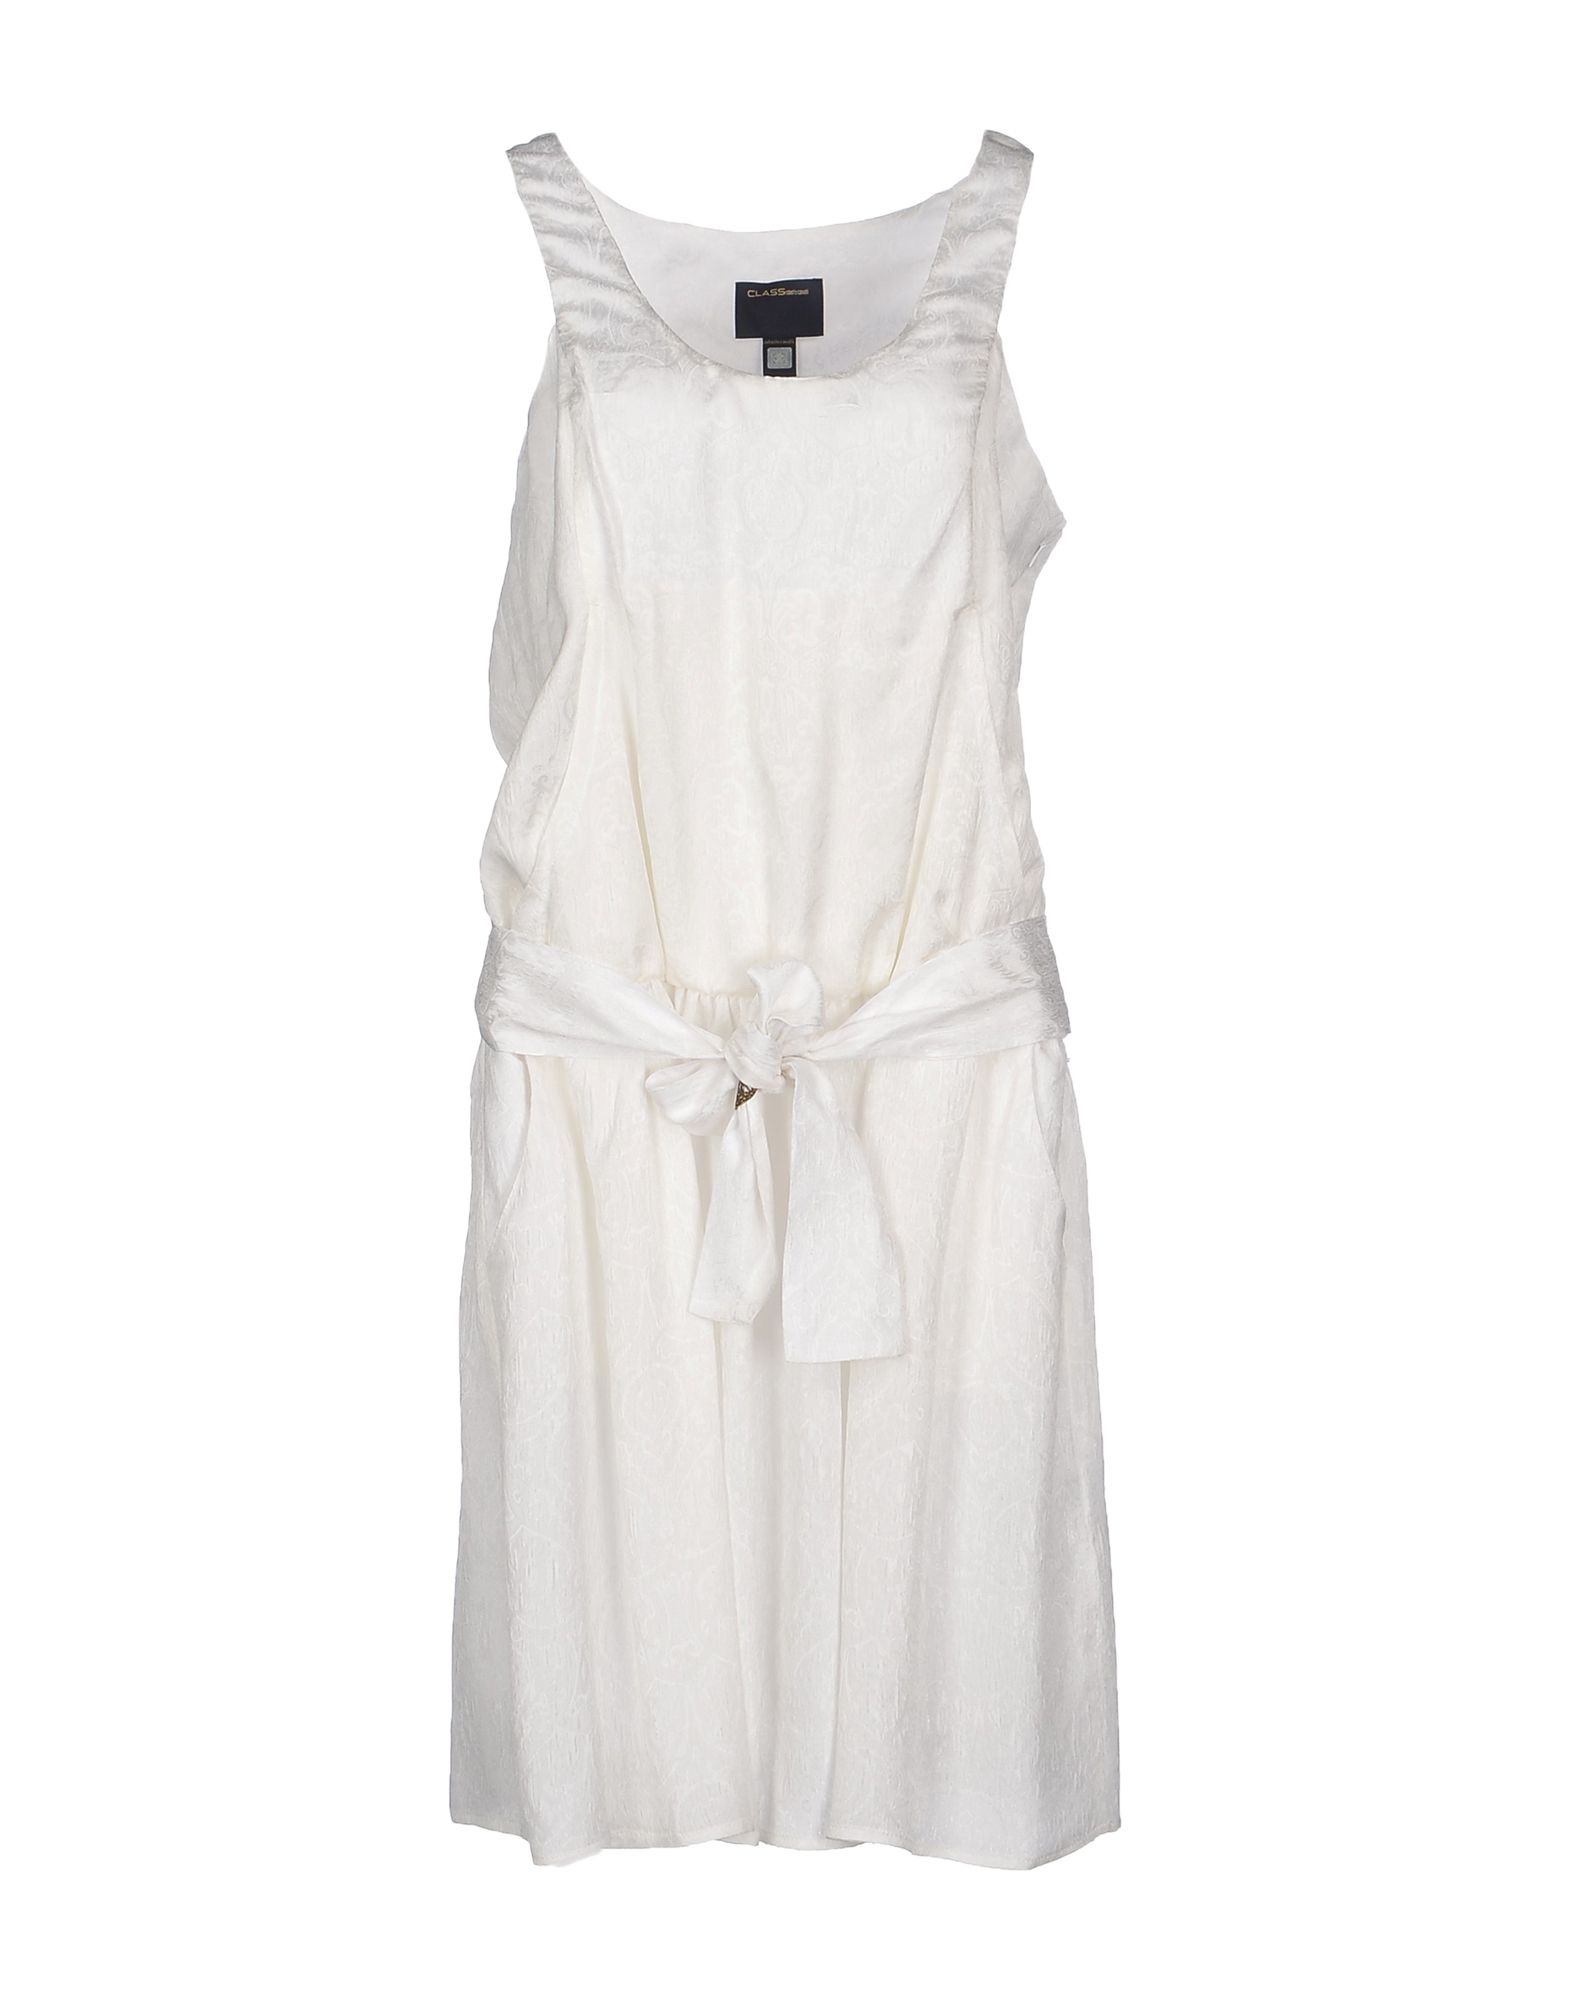 Lyst - Class Roberto Cavalli Knee-length Dress in White